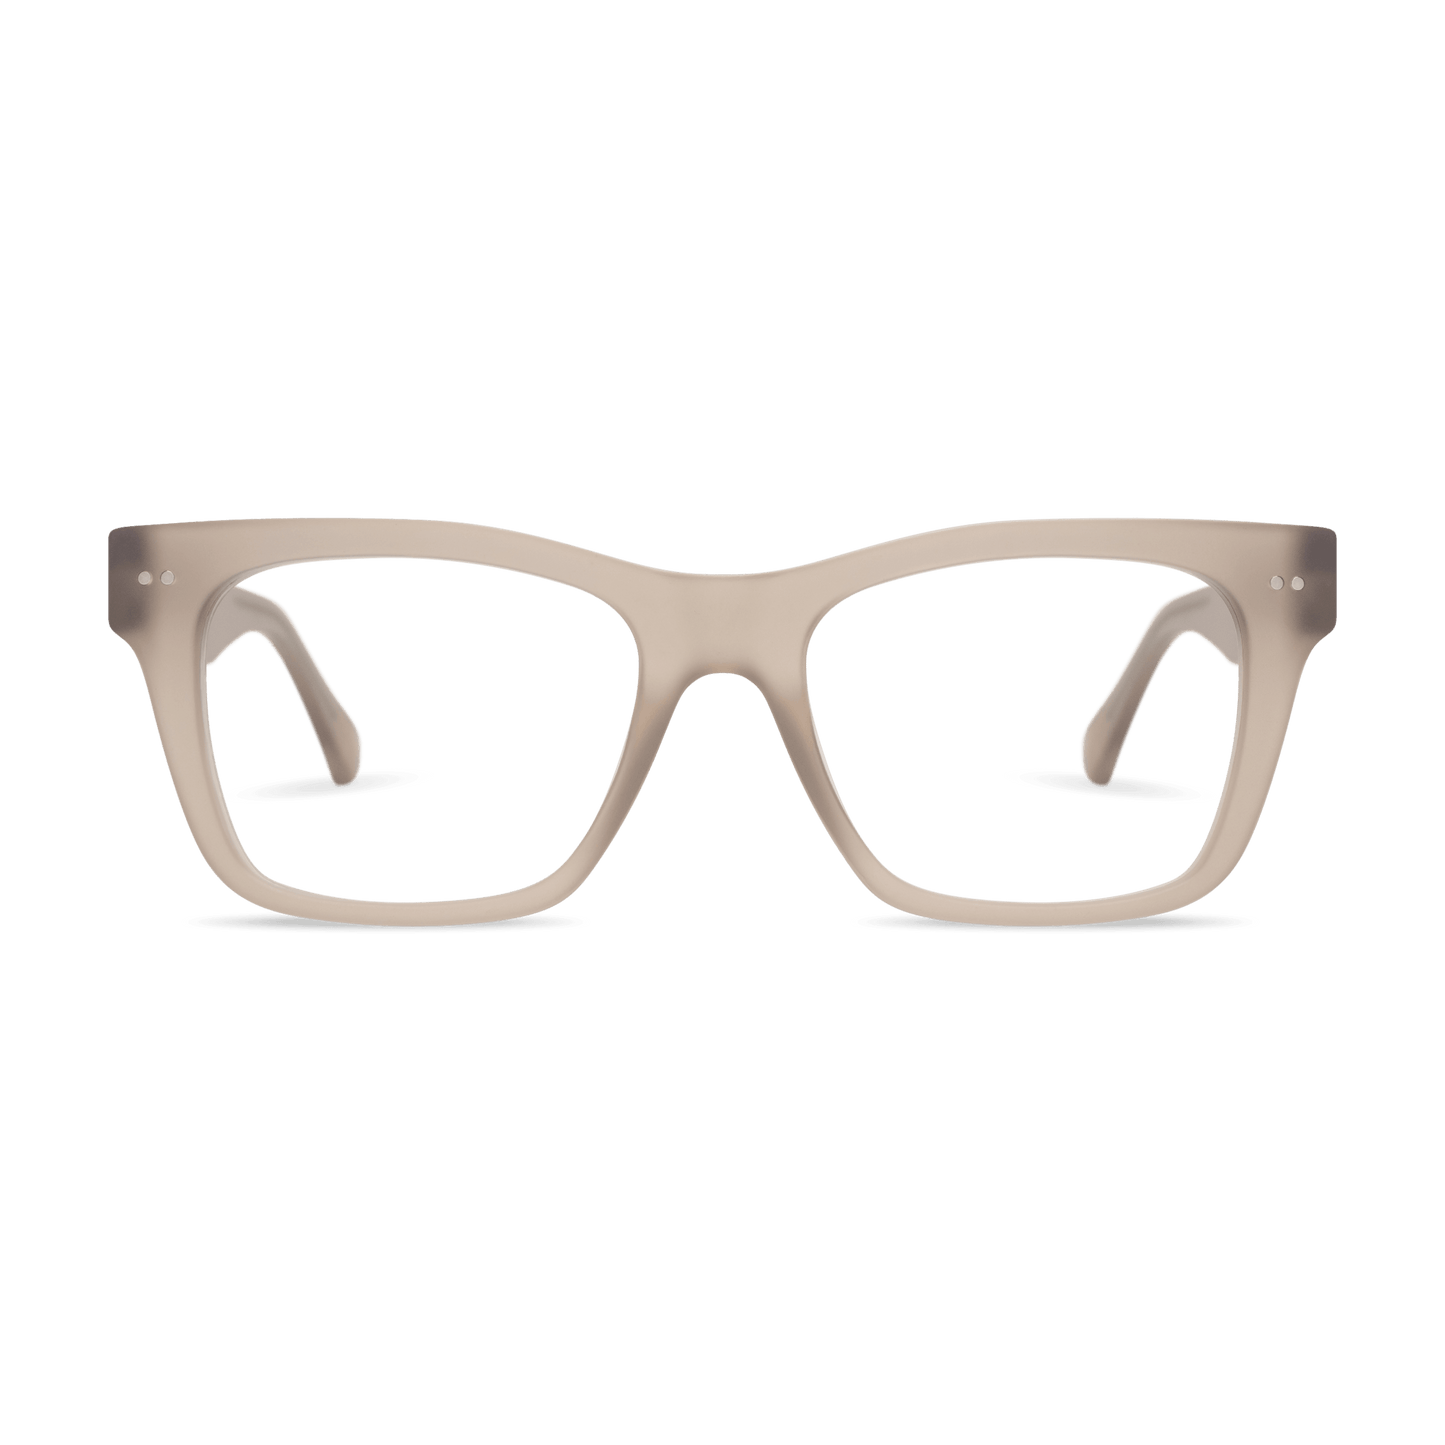 Cosmo Blue Light Eyewear Frames LOOK OPTIC (Taupe) +0.00 